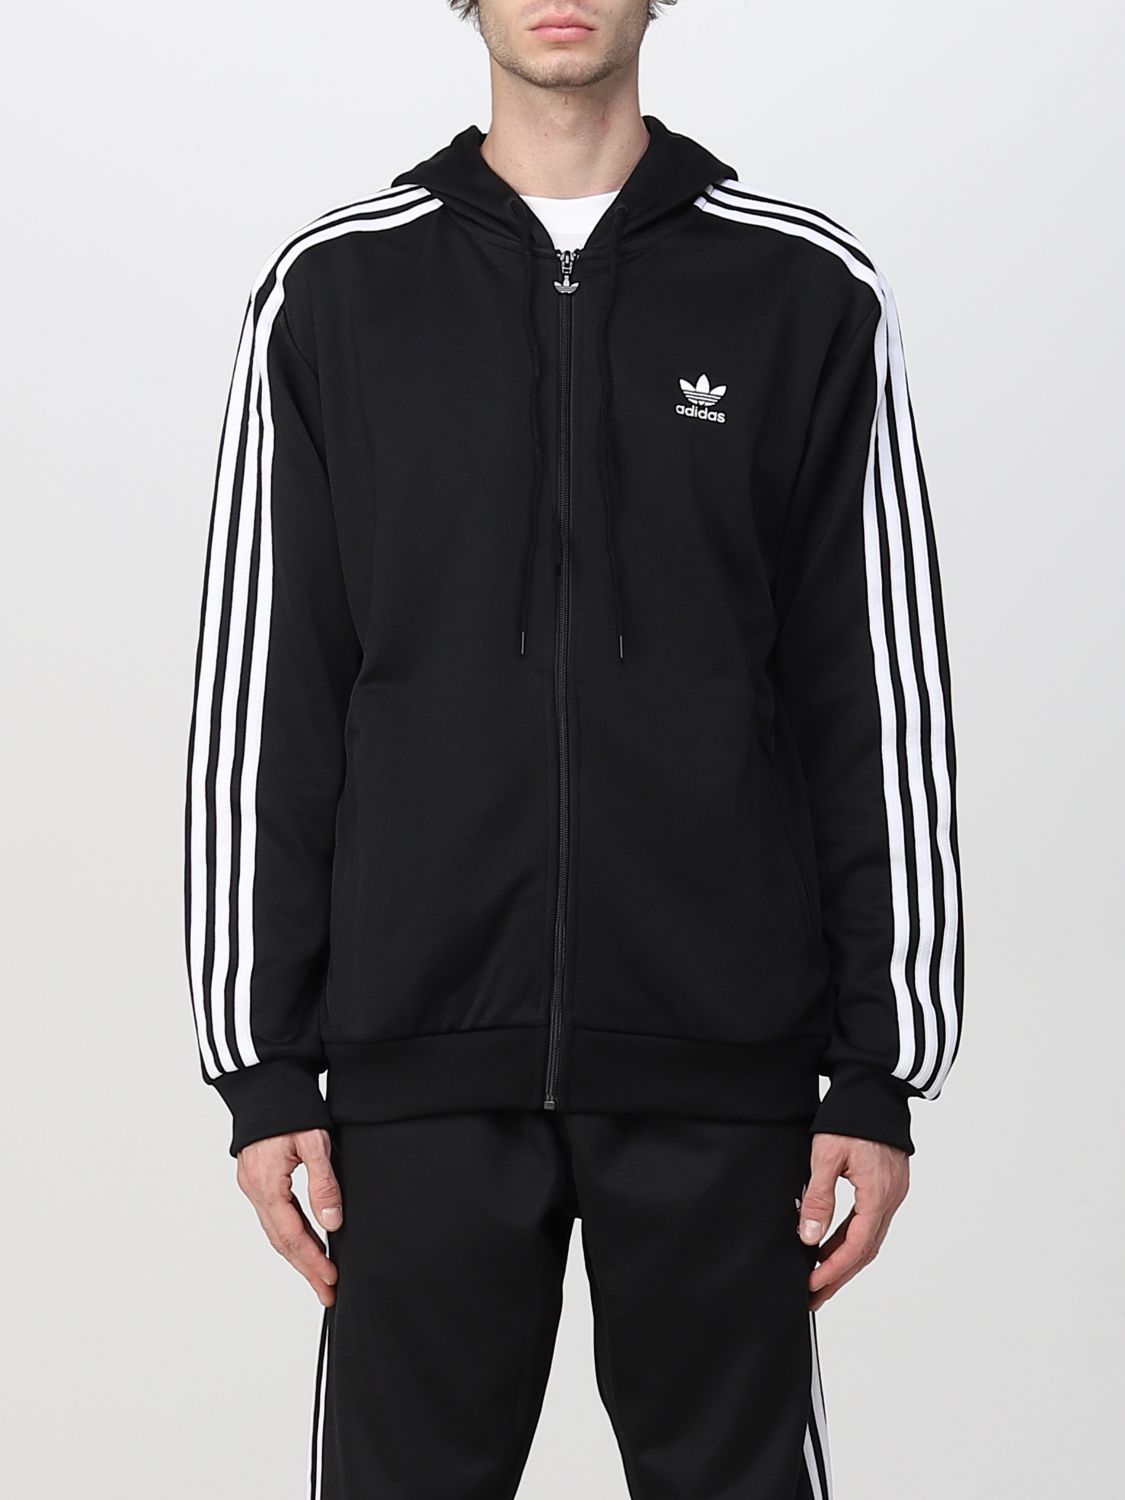 ADIDAS ORIGINALS: man - Black | Adidas Originals sweatshirt HB9512 online GIGLIO.COM